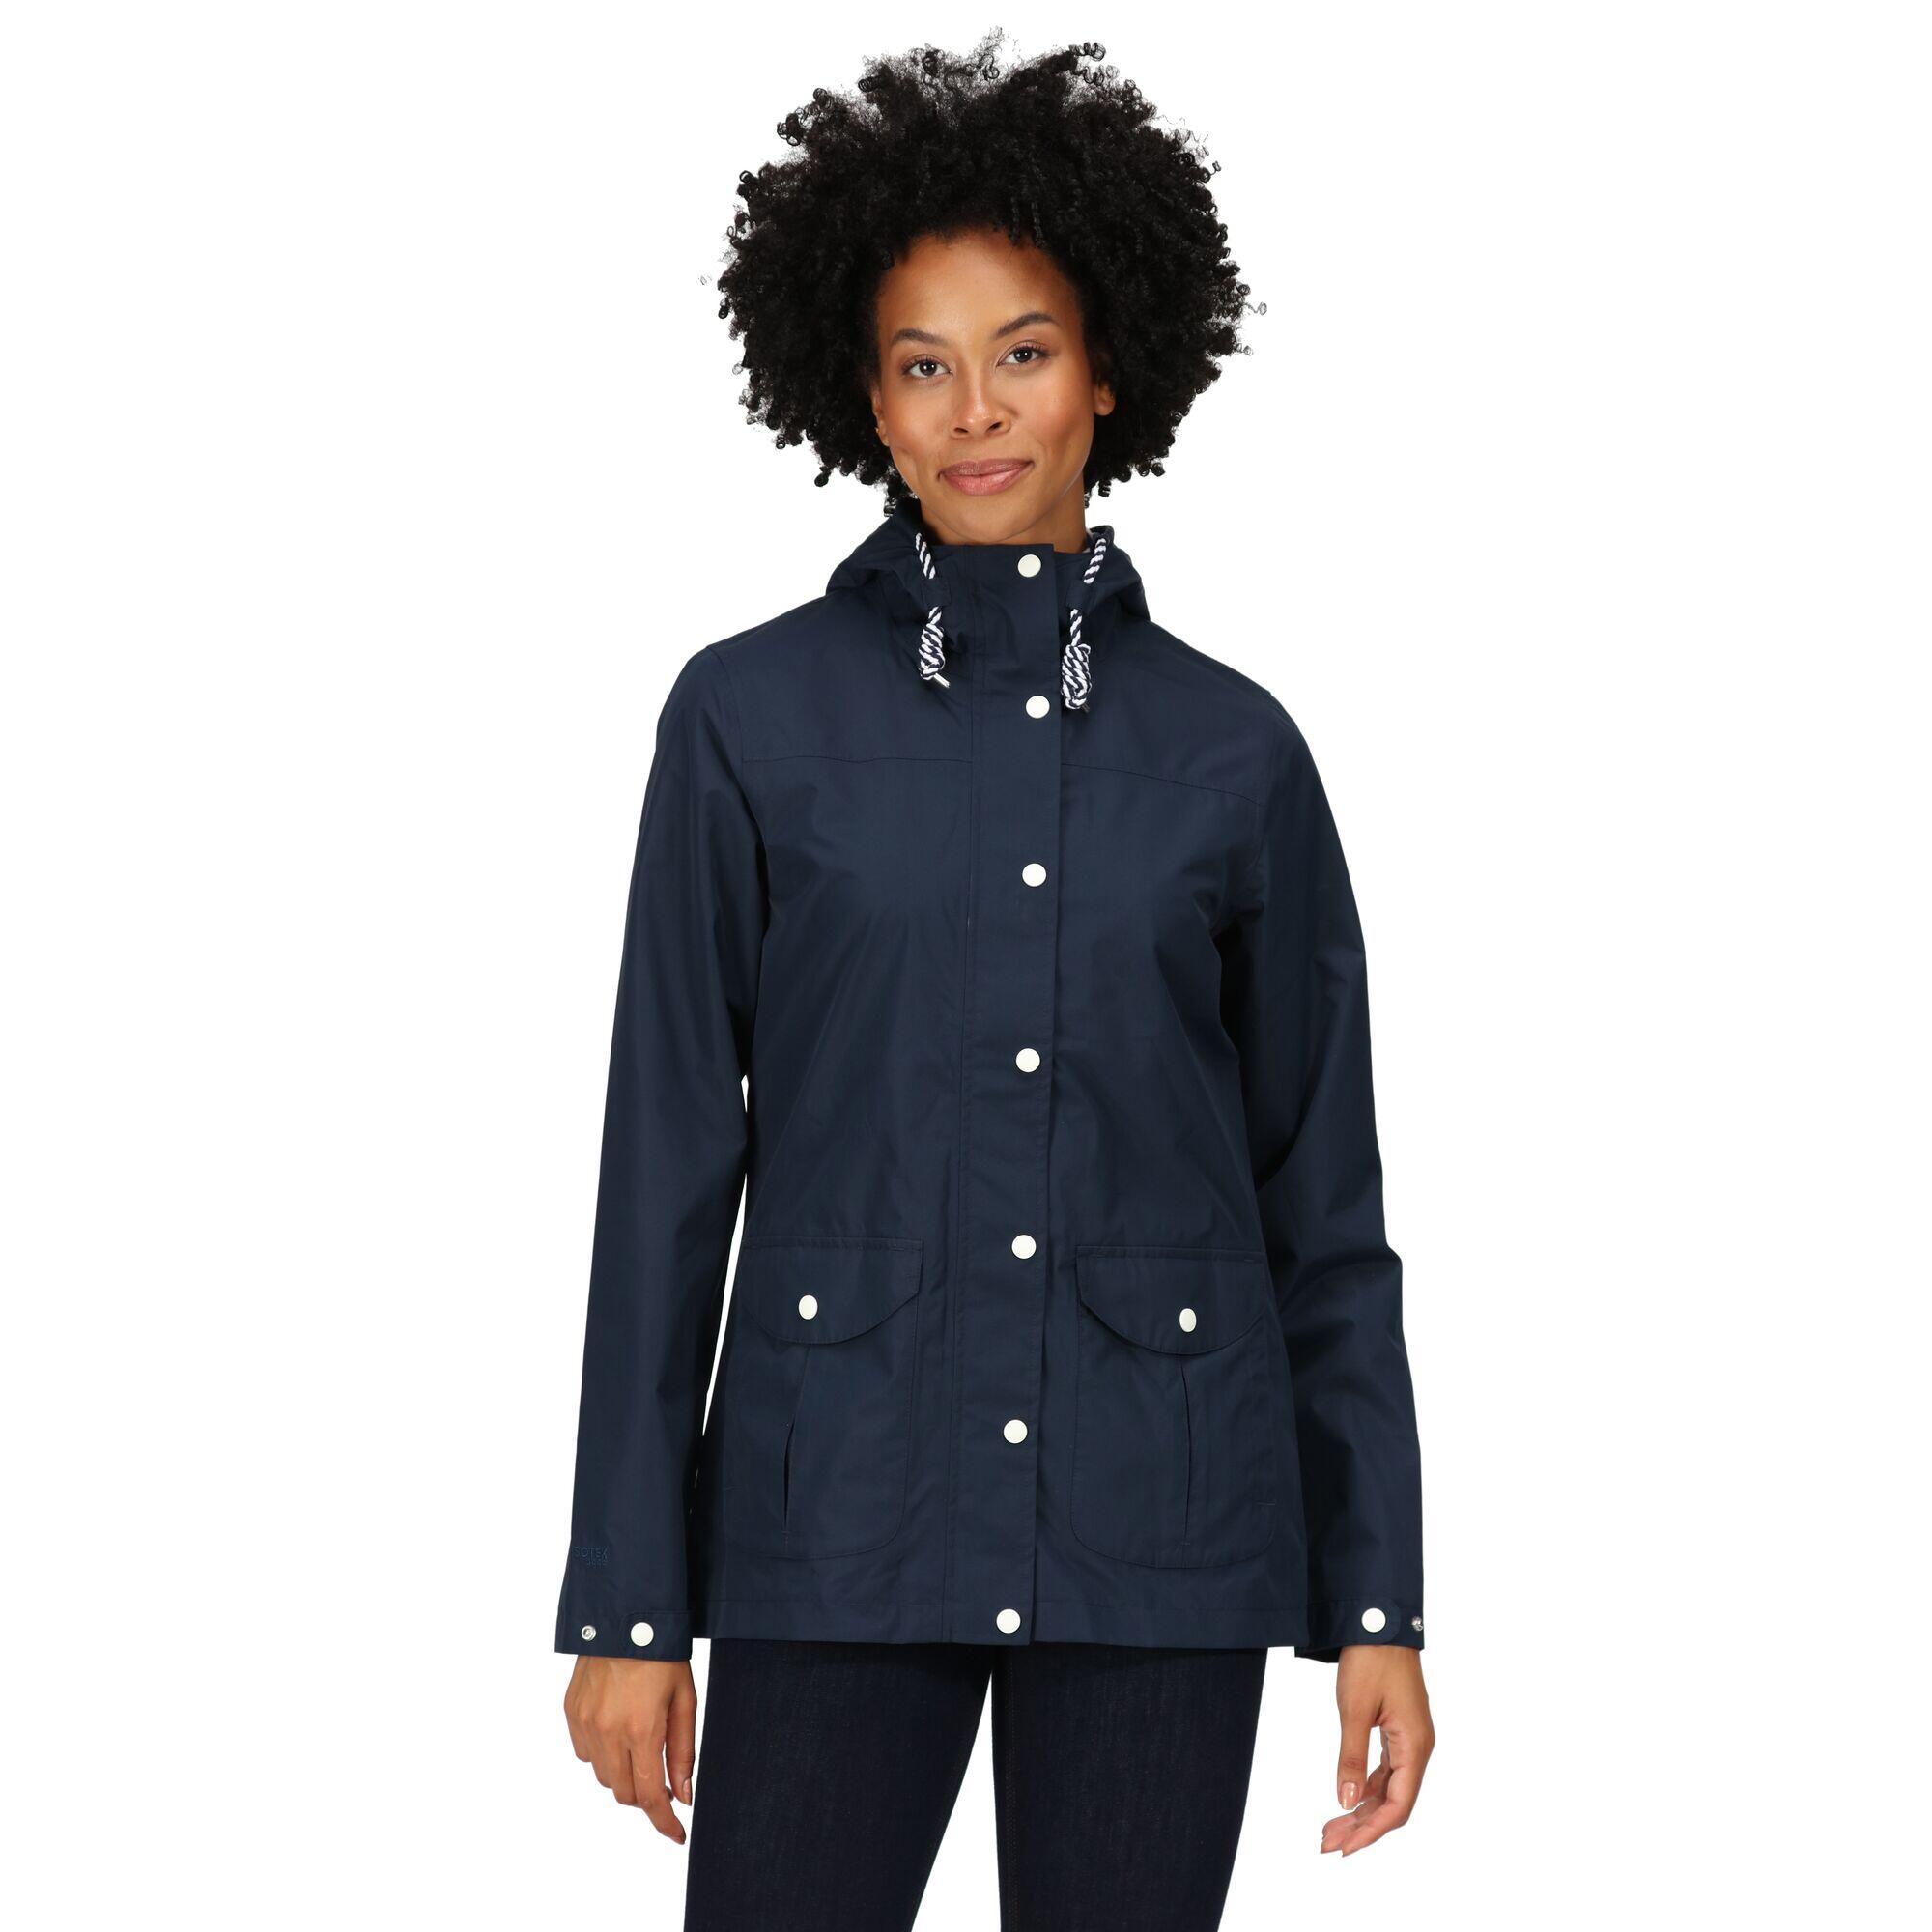 Bayarma Women's Walking Cotton Jacket - Navy 1/6